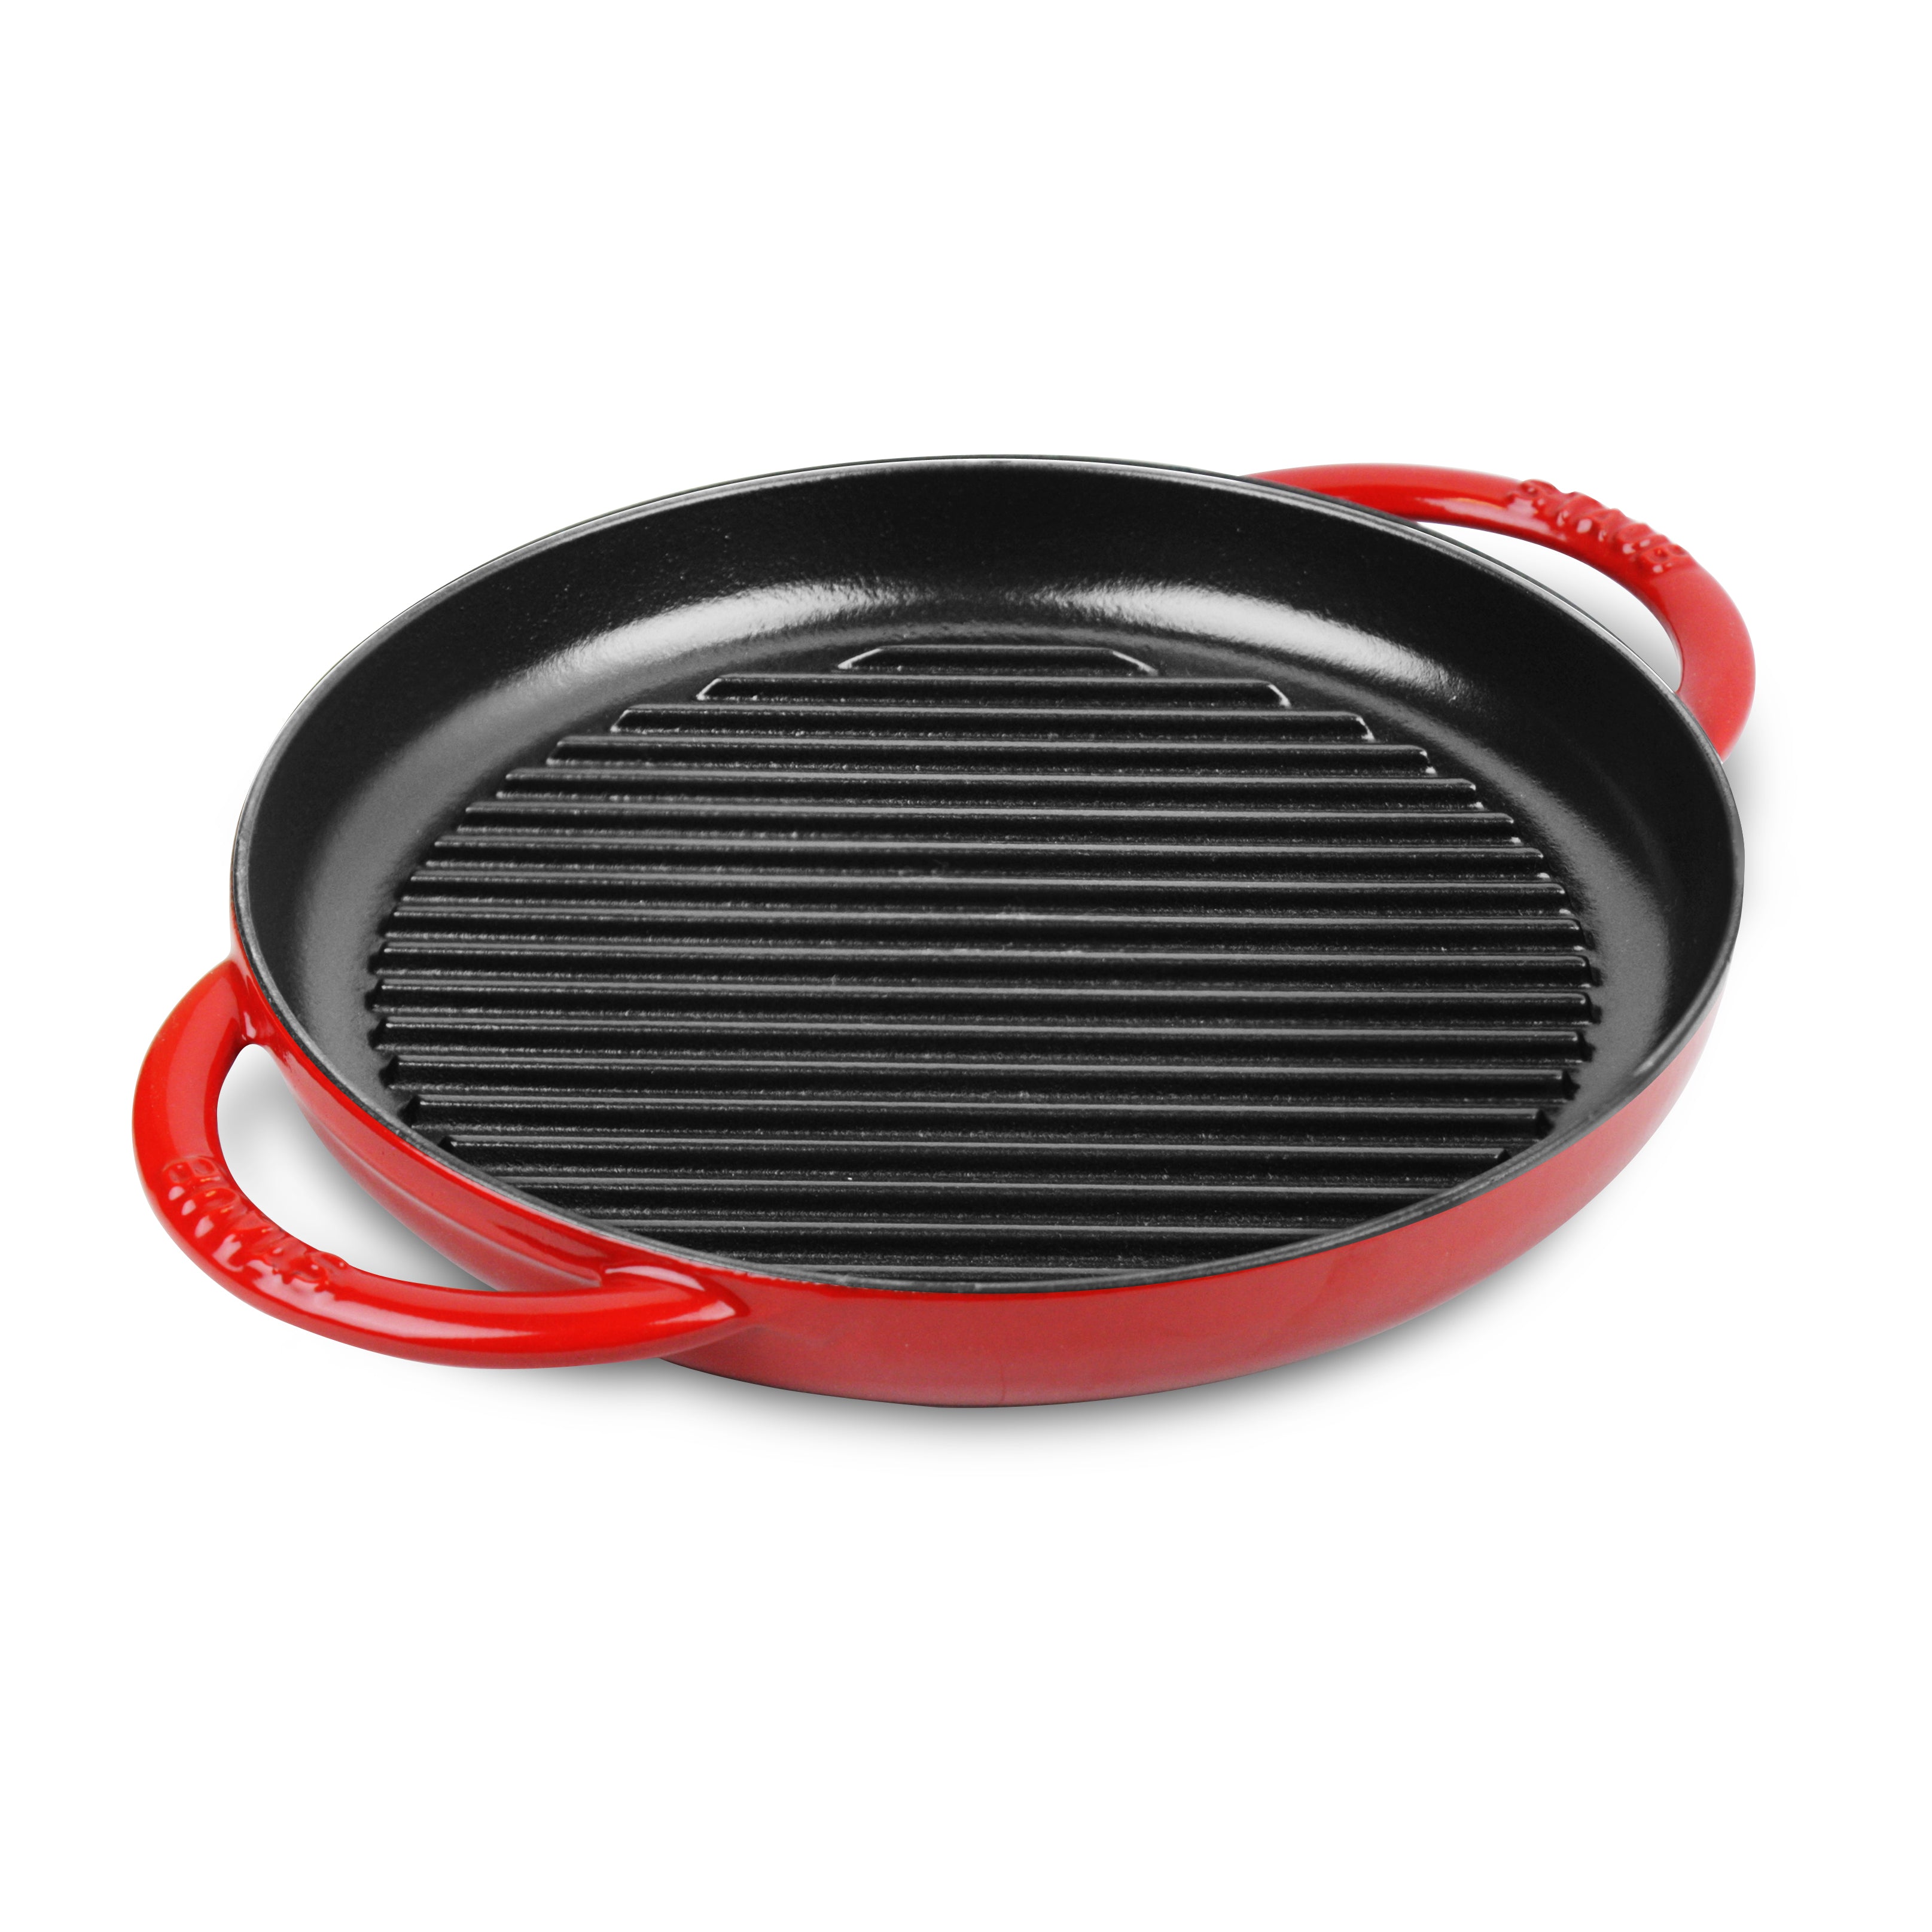 Staub 10-Inch Cherry Red Round Grill Pan